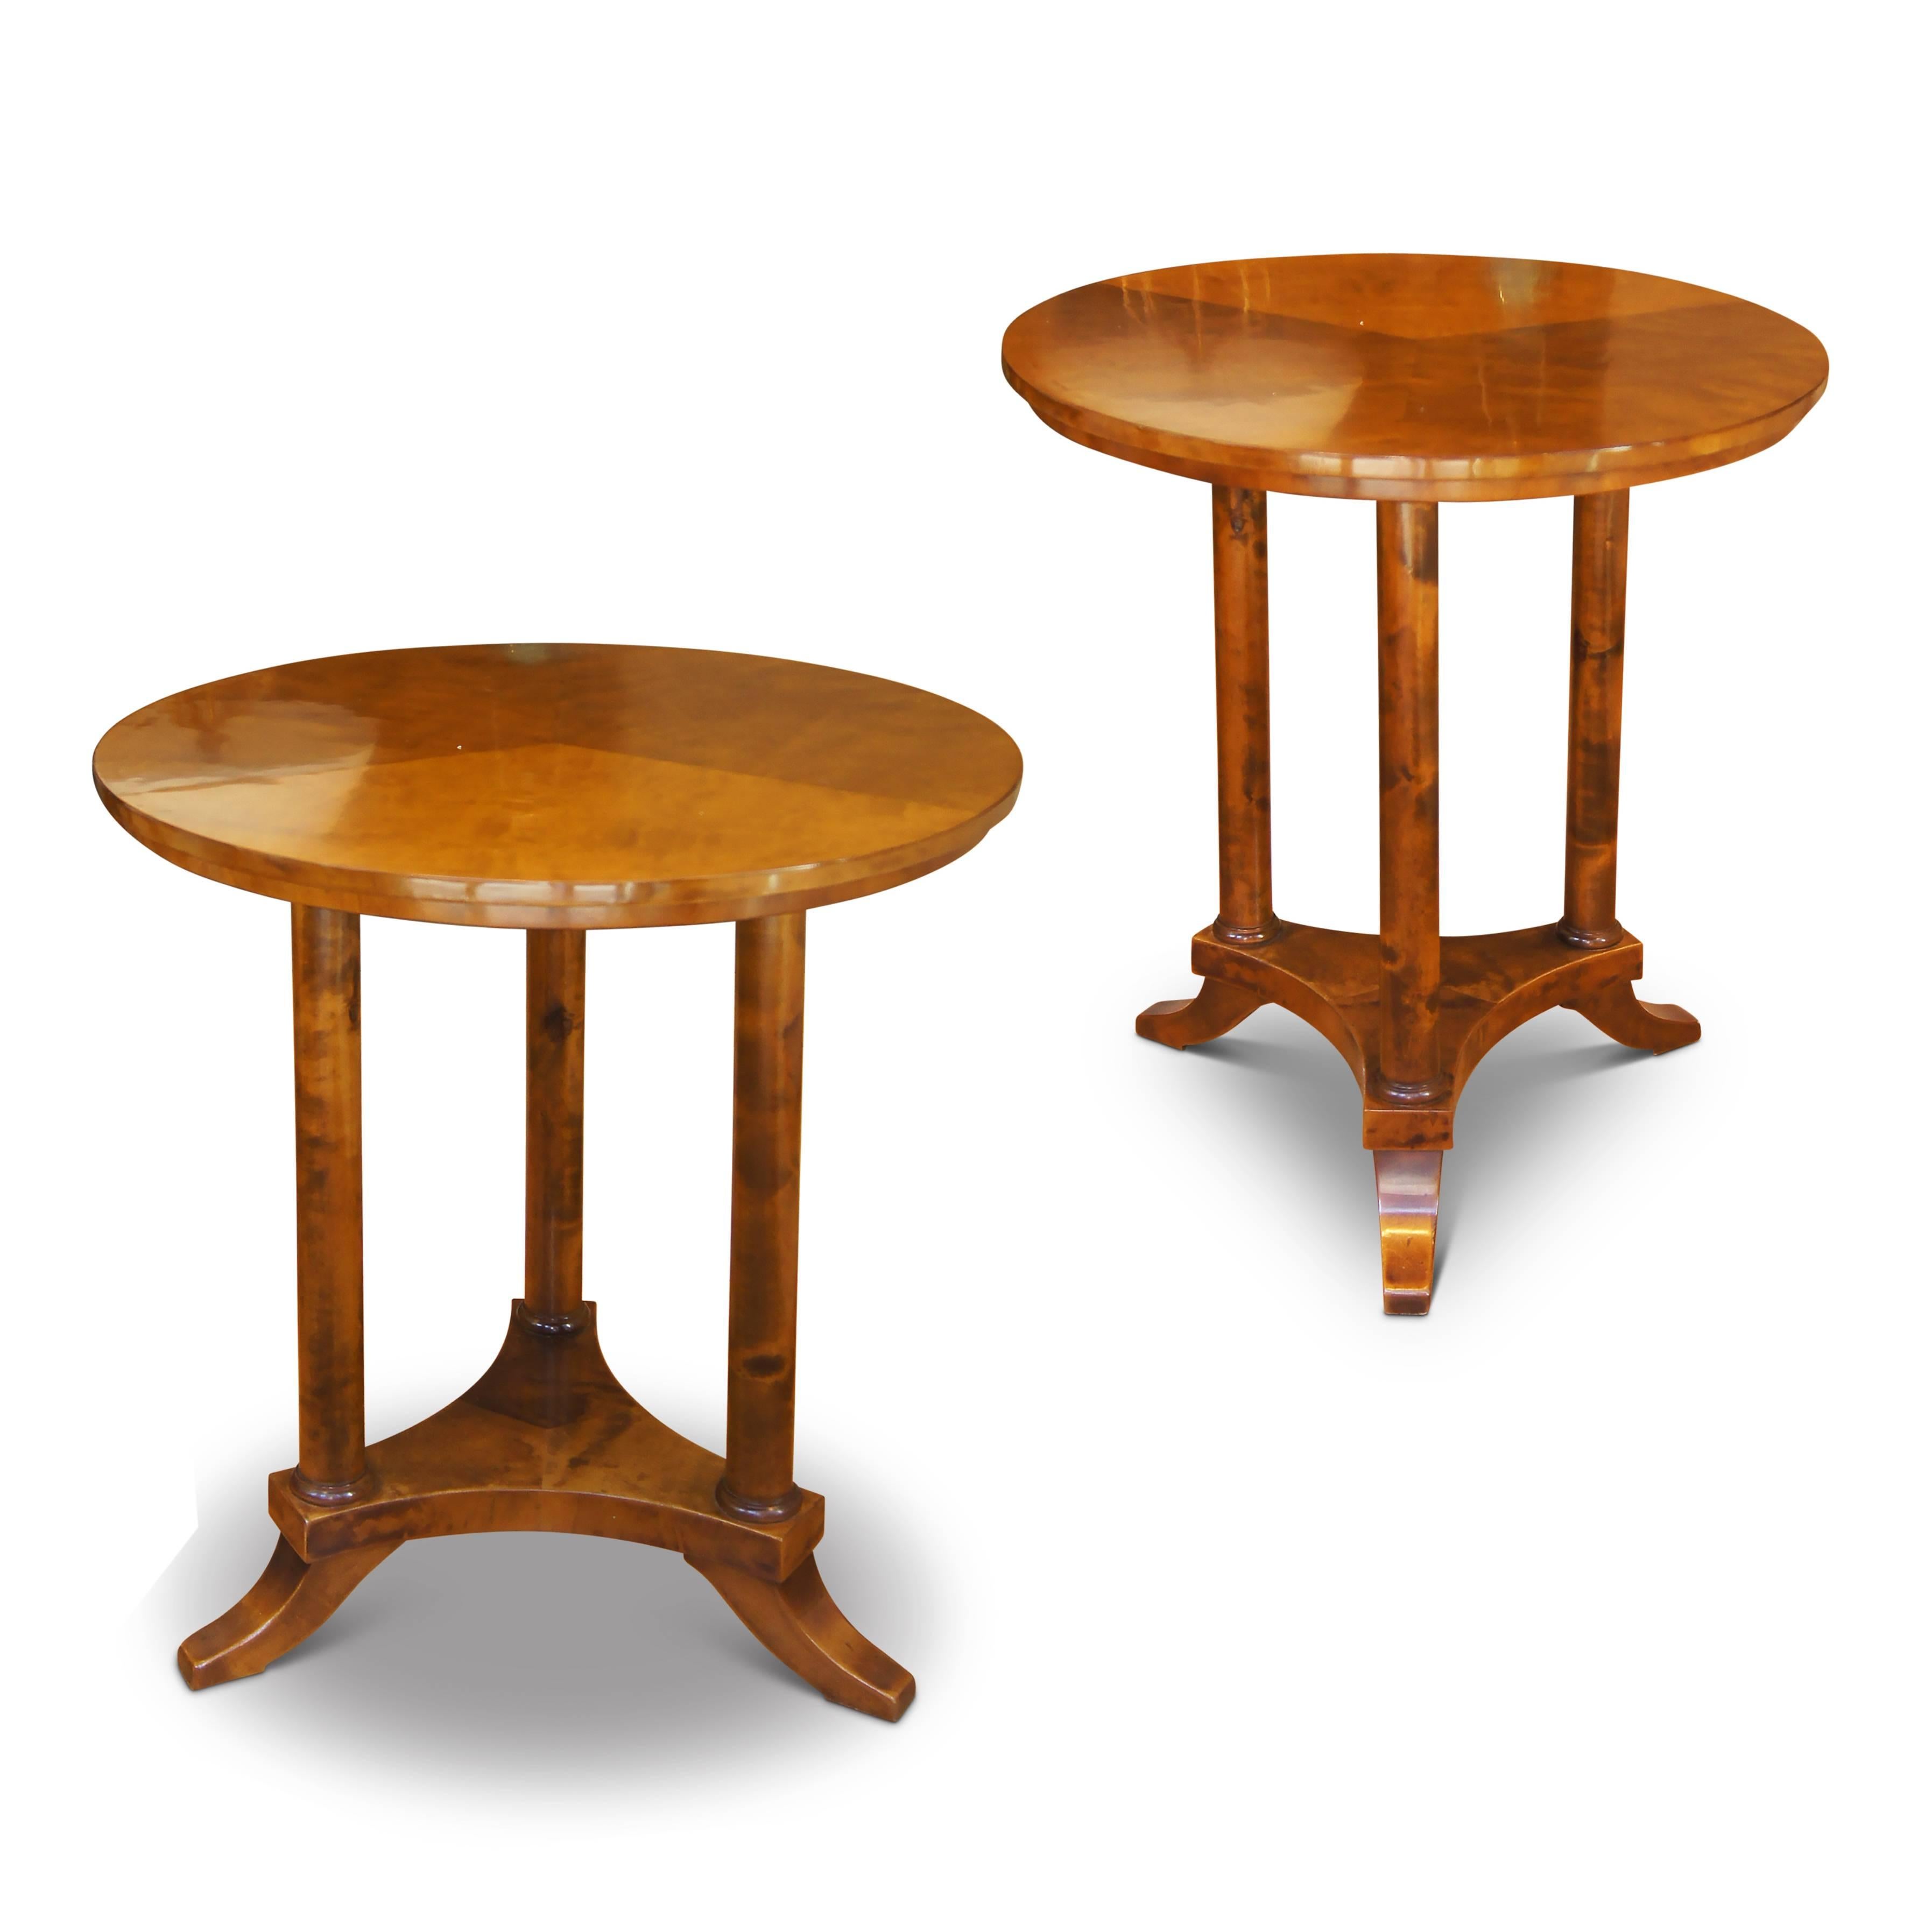 Swedish Pair of side tables in birch by Nordiska Kompaniet attrib. to Axel Einar Hjorth For Sale